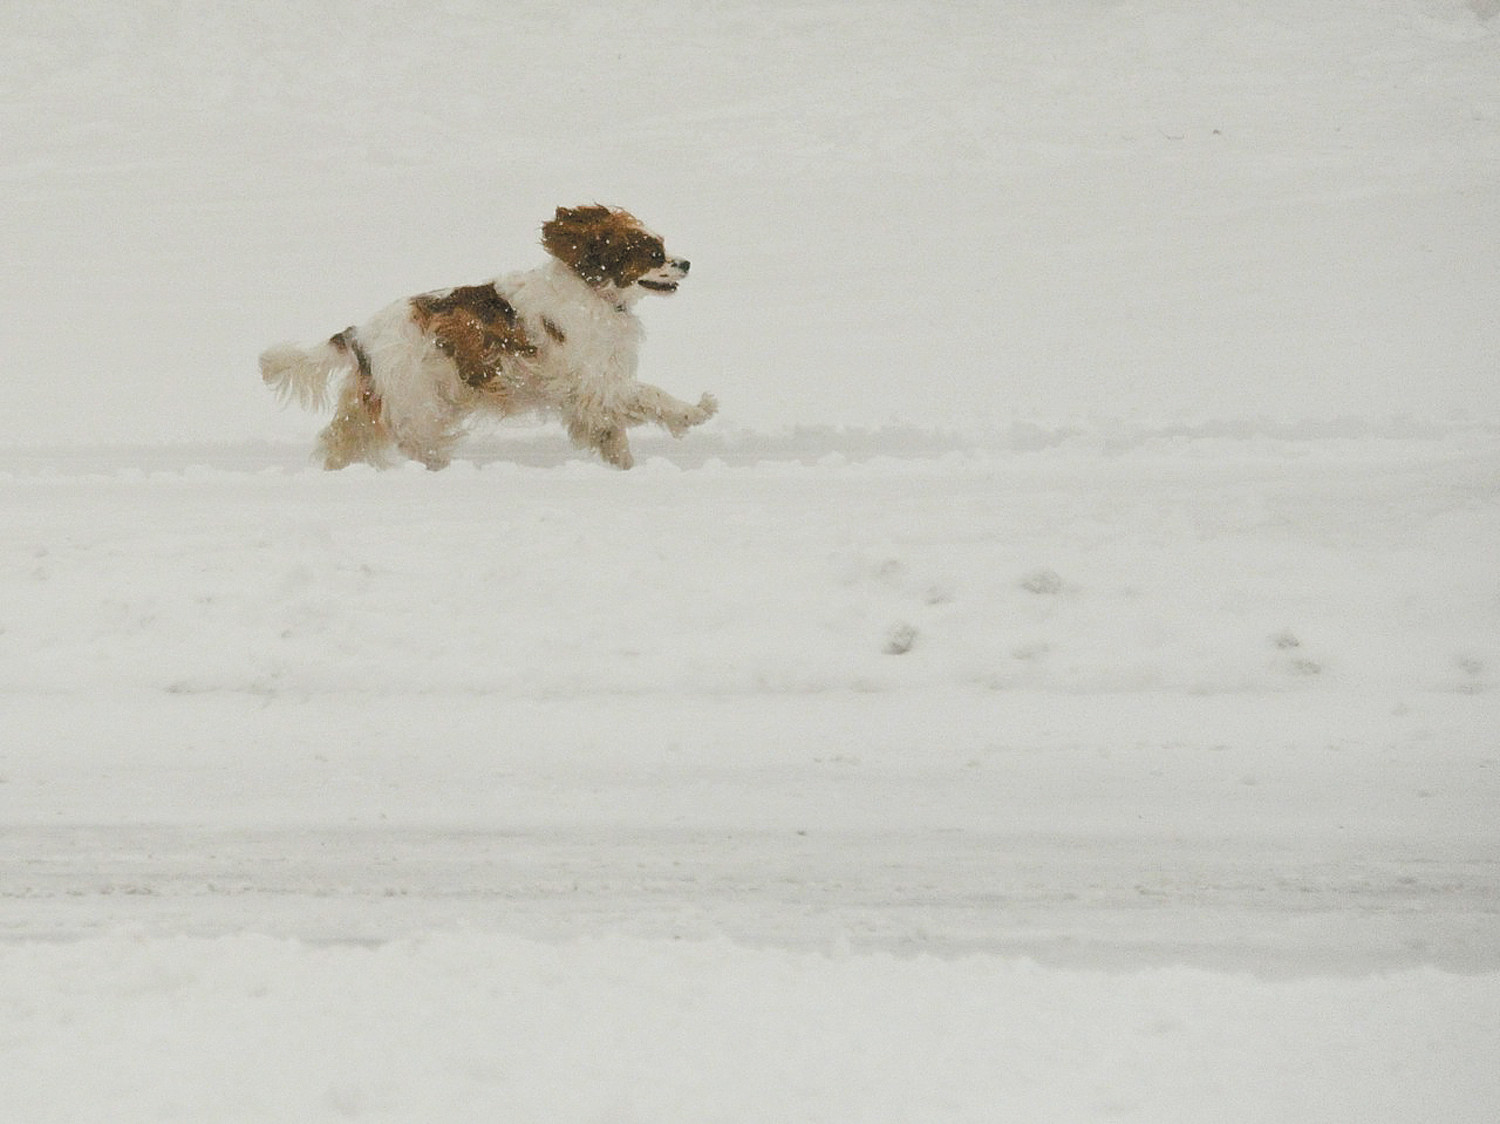 Dog frolics on Lindbergh Street in Oceanside on Tuesday.